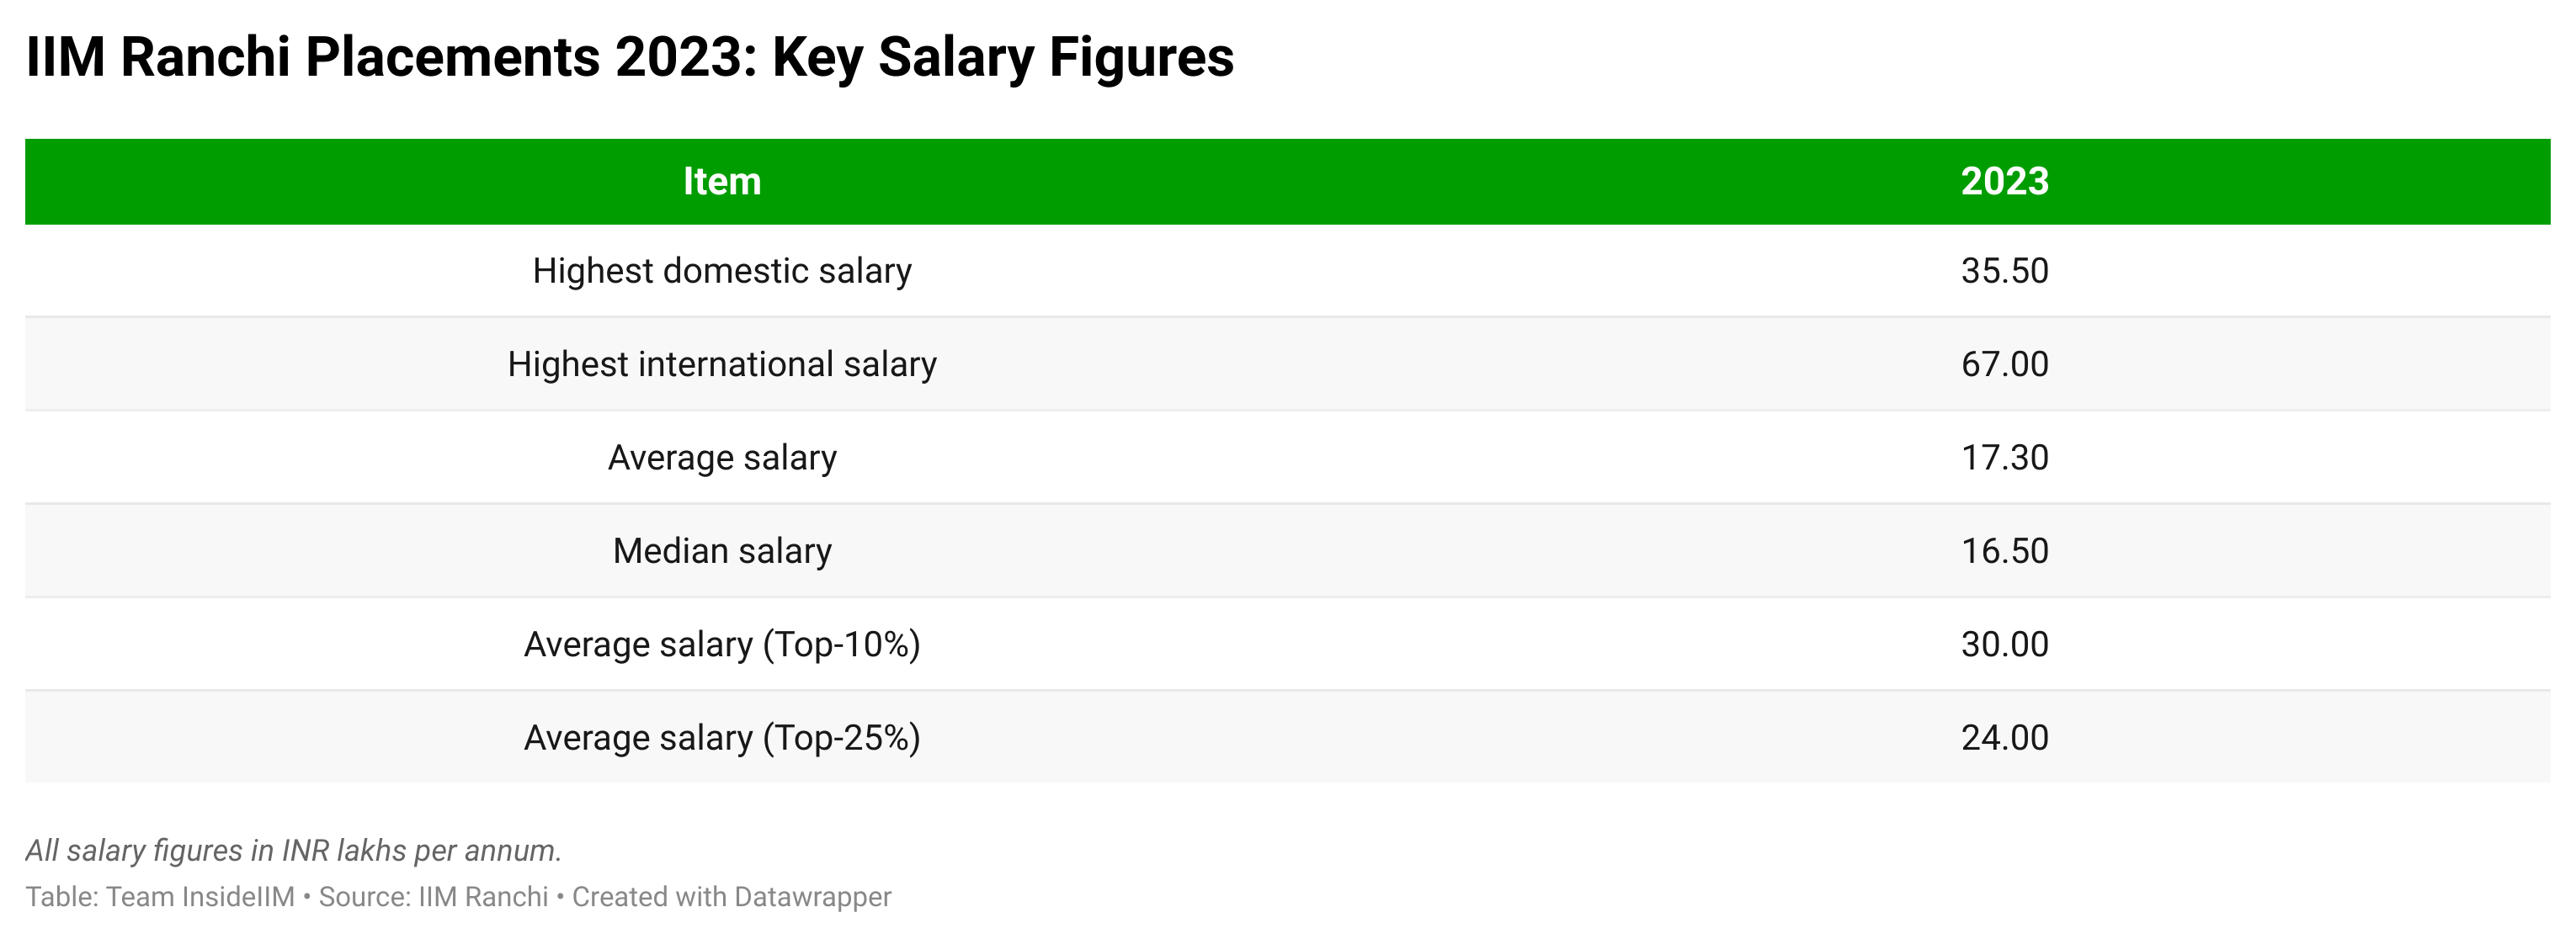 IIM Ranchi placements 2023: key salary figures